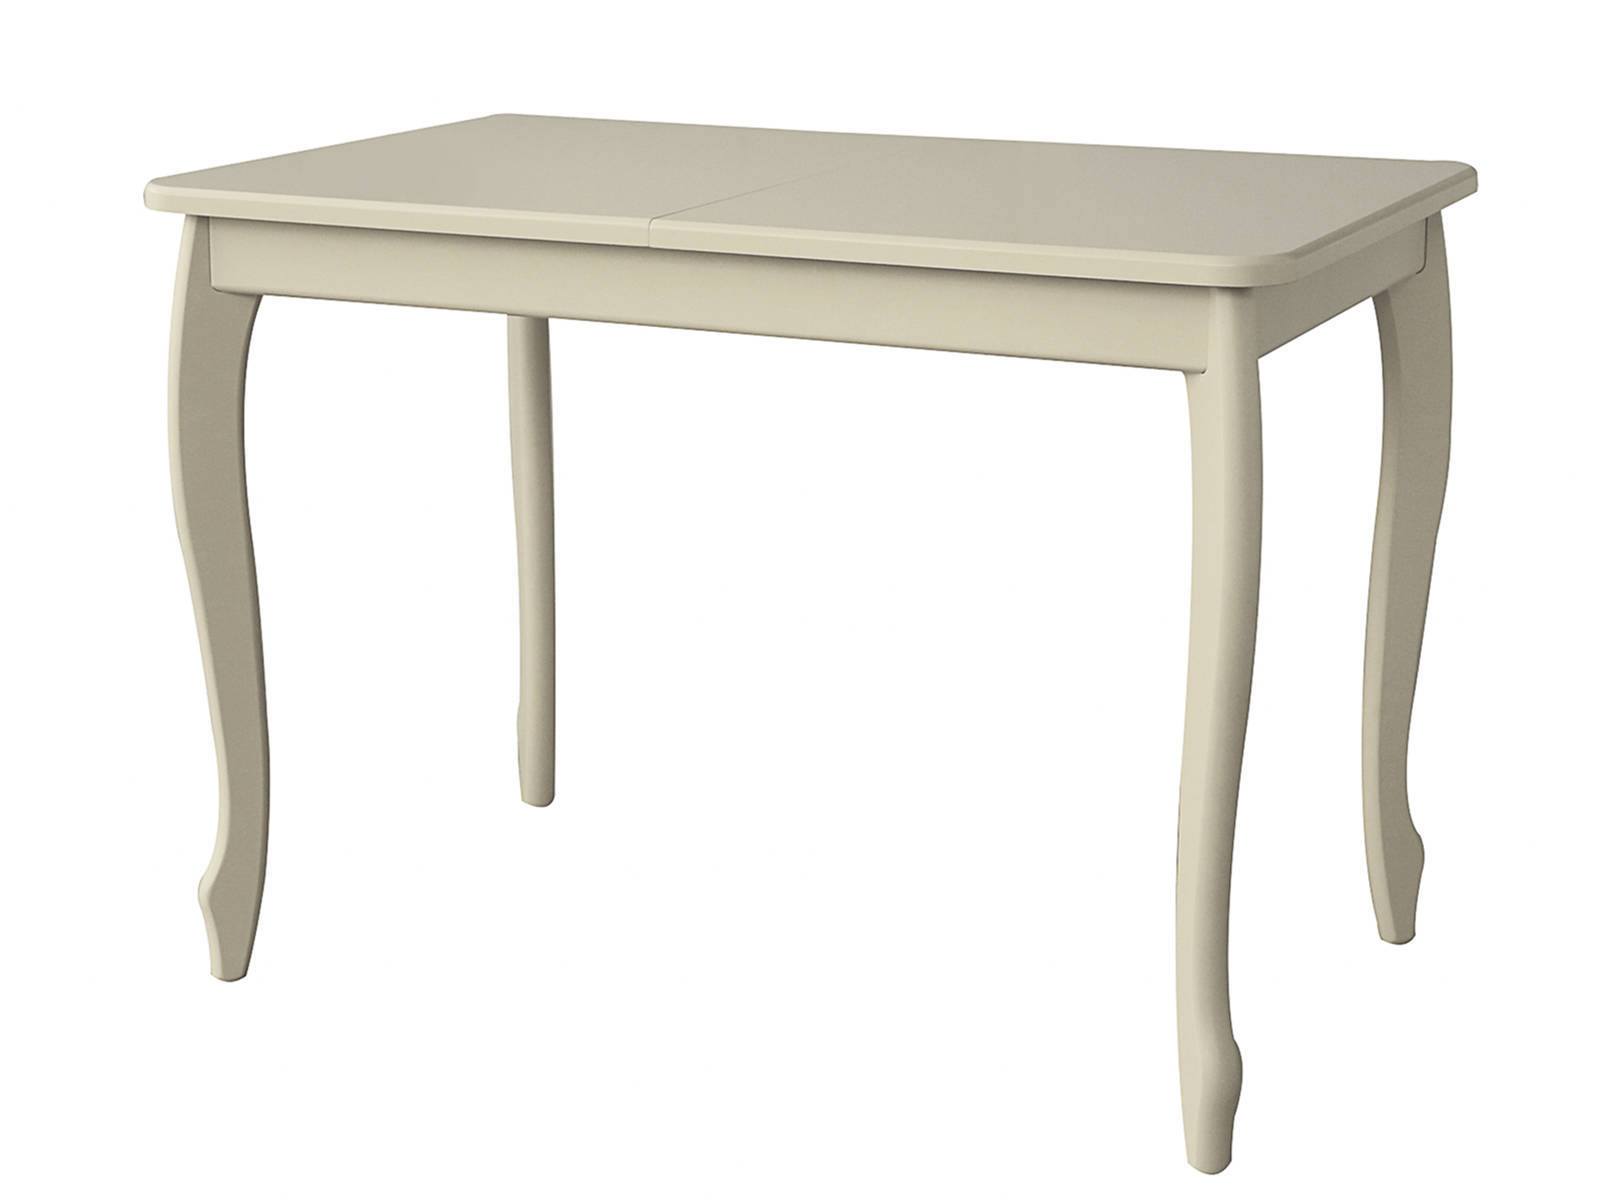 Кухонный стол Блюз 2 Белый, Массив Бук стол кухонный прямоугольный 1 1х0 73 м белый бук table 110 15356